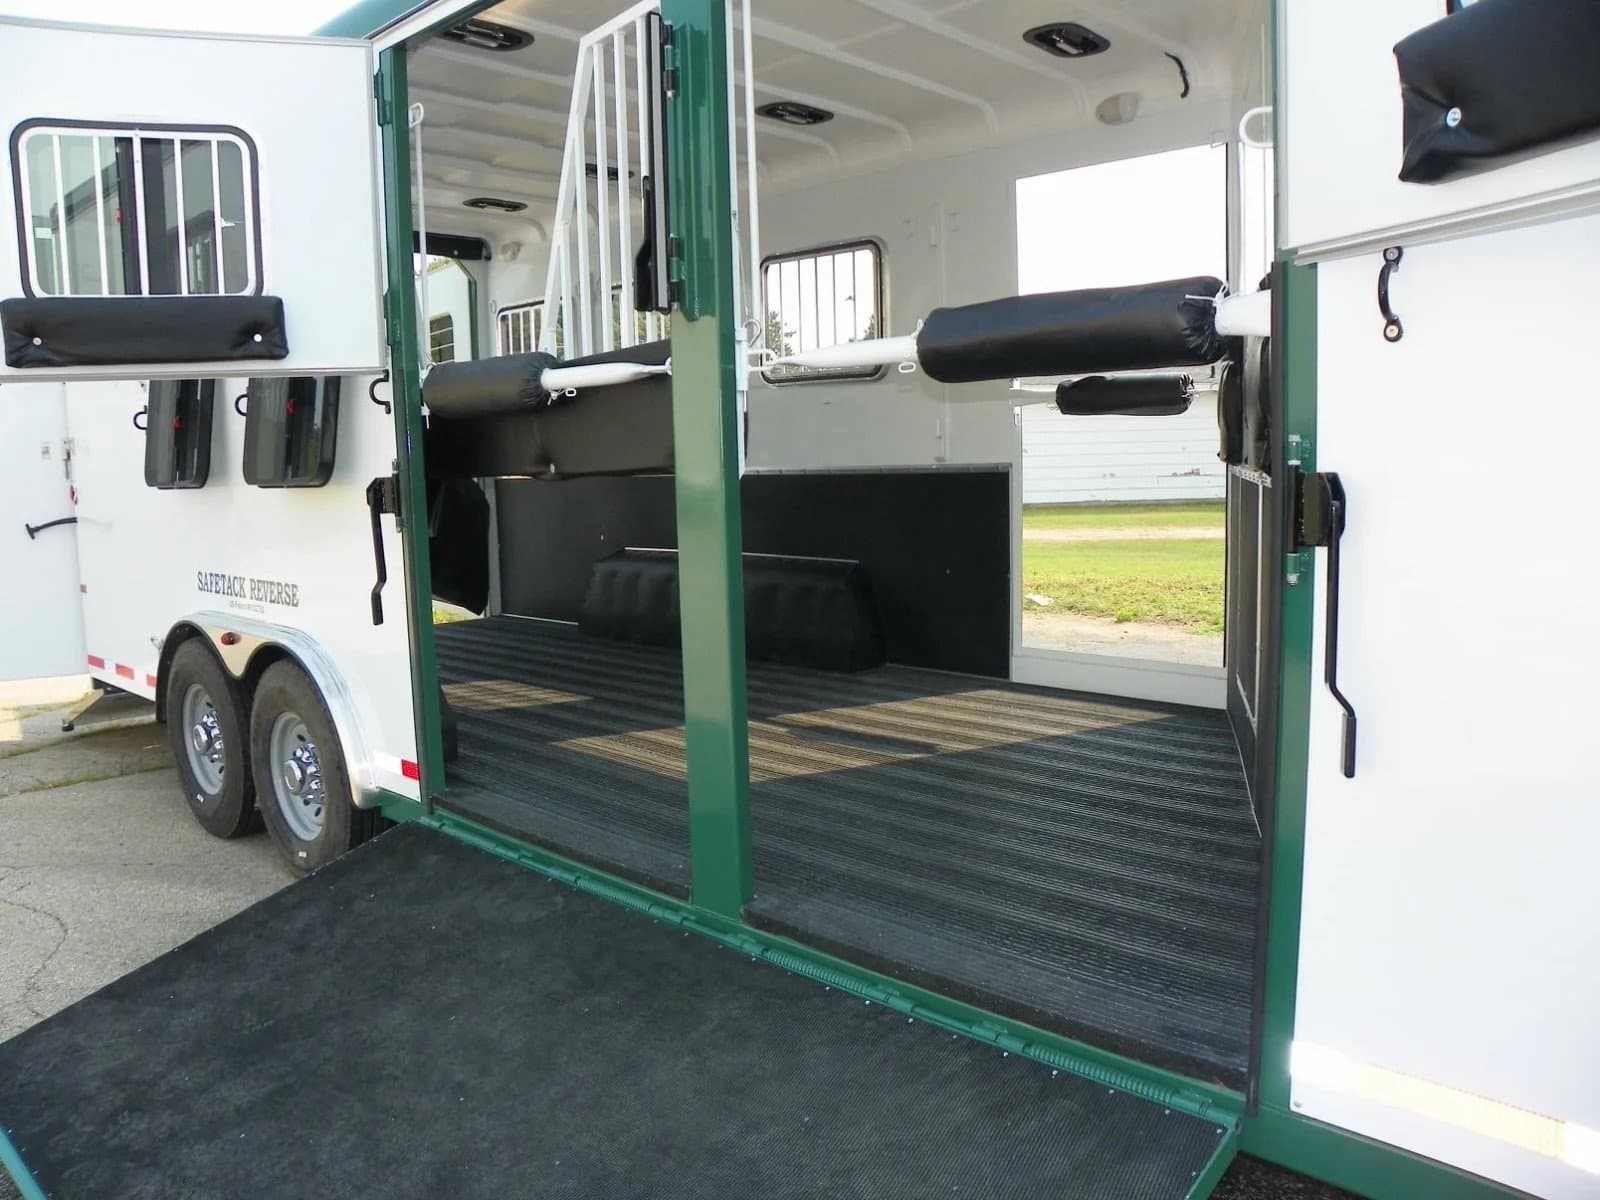  The SafeTack horse trailer design has a side loading door.